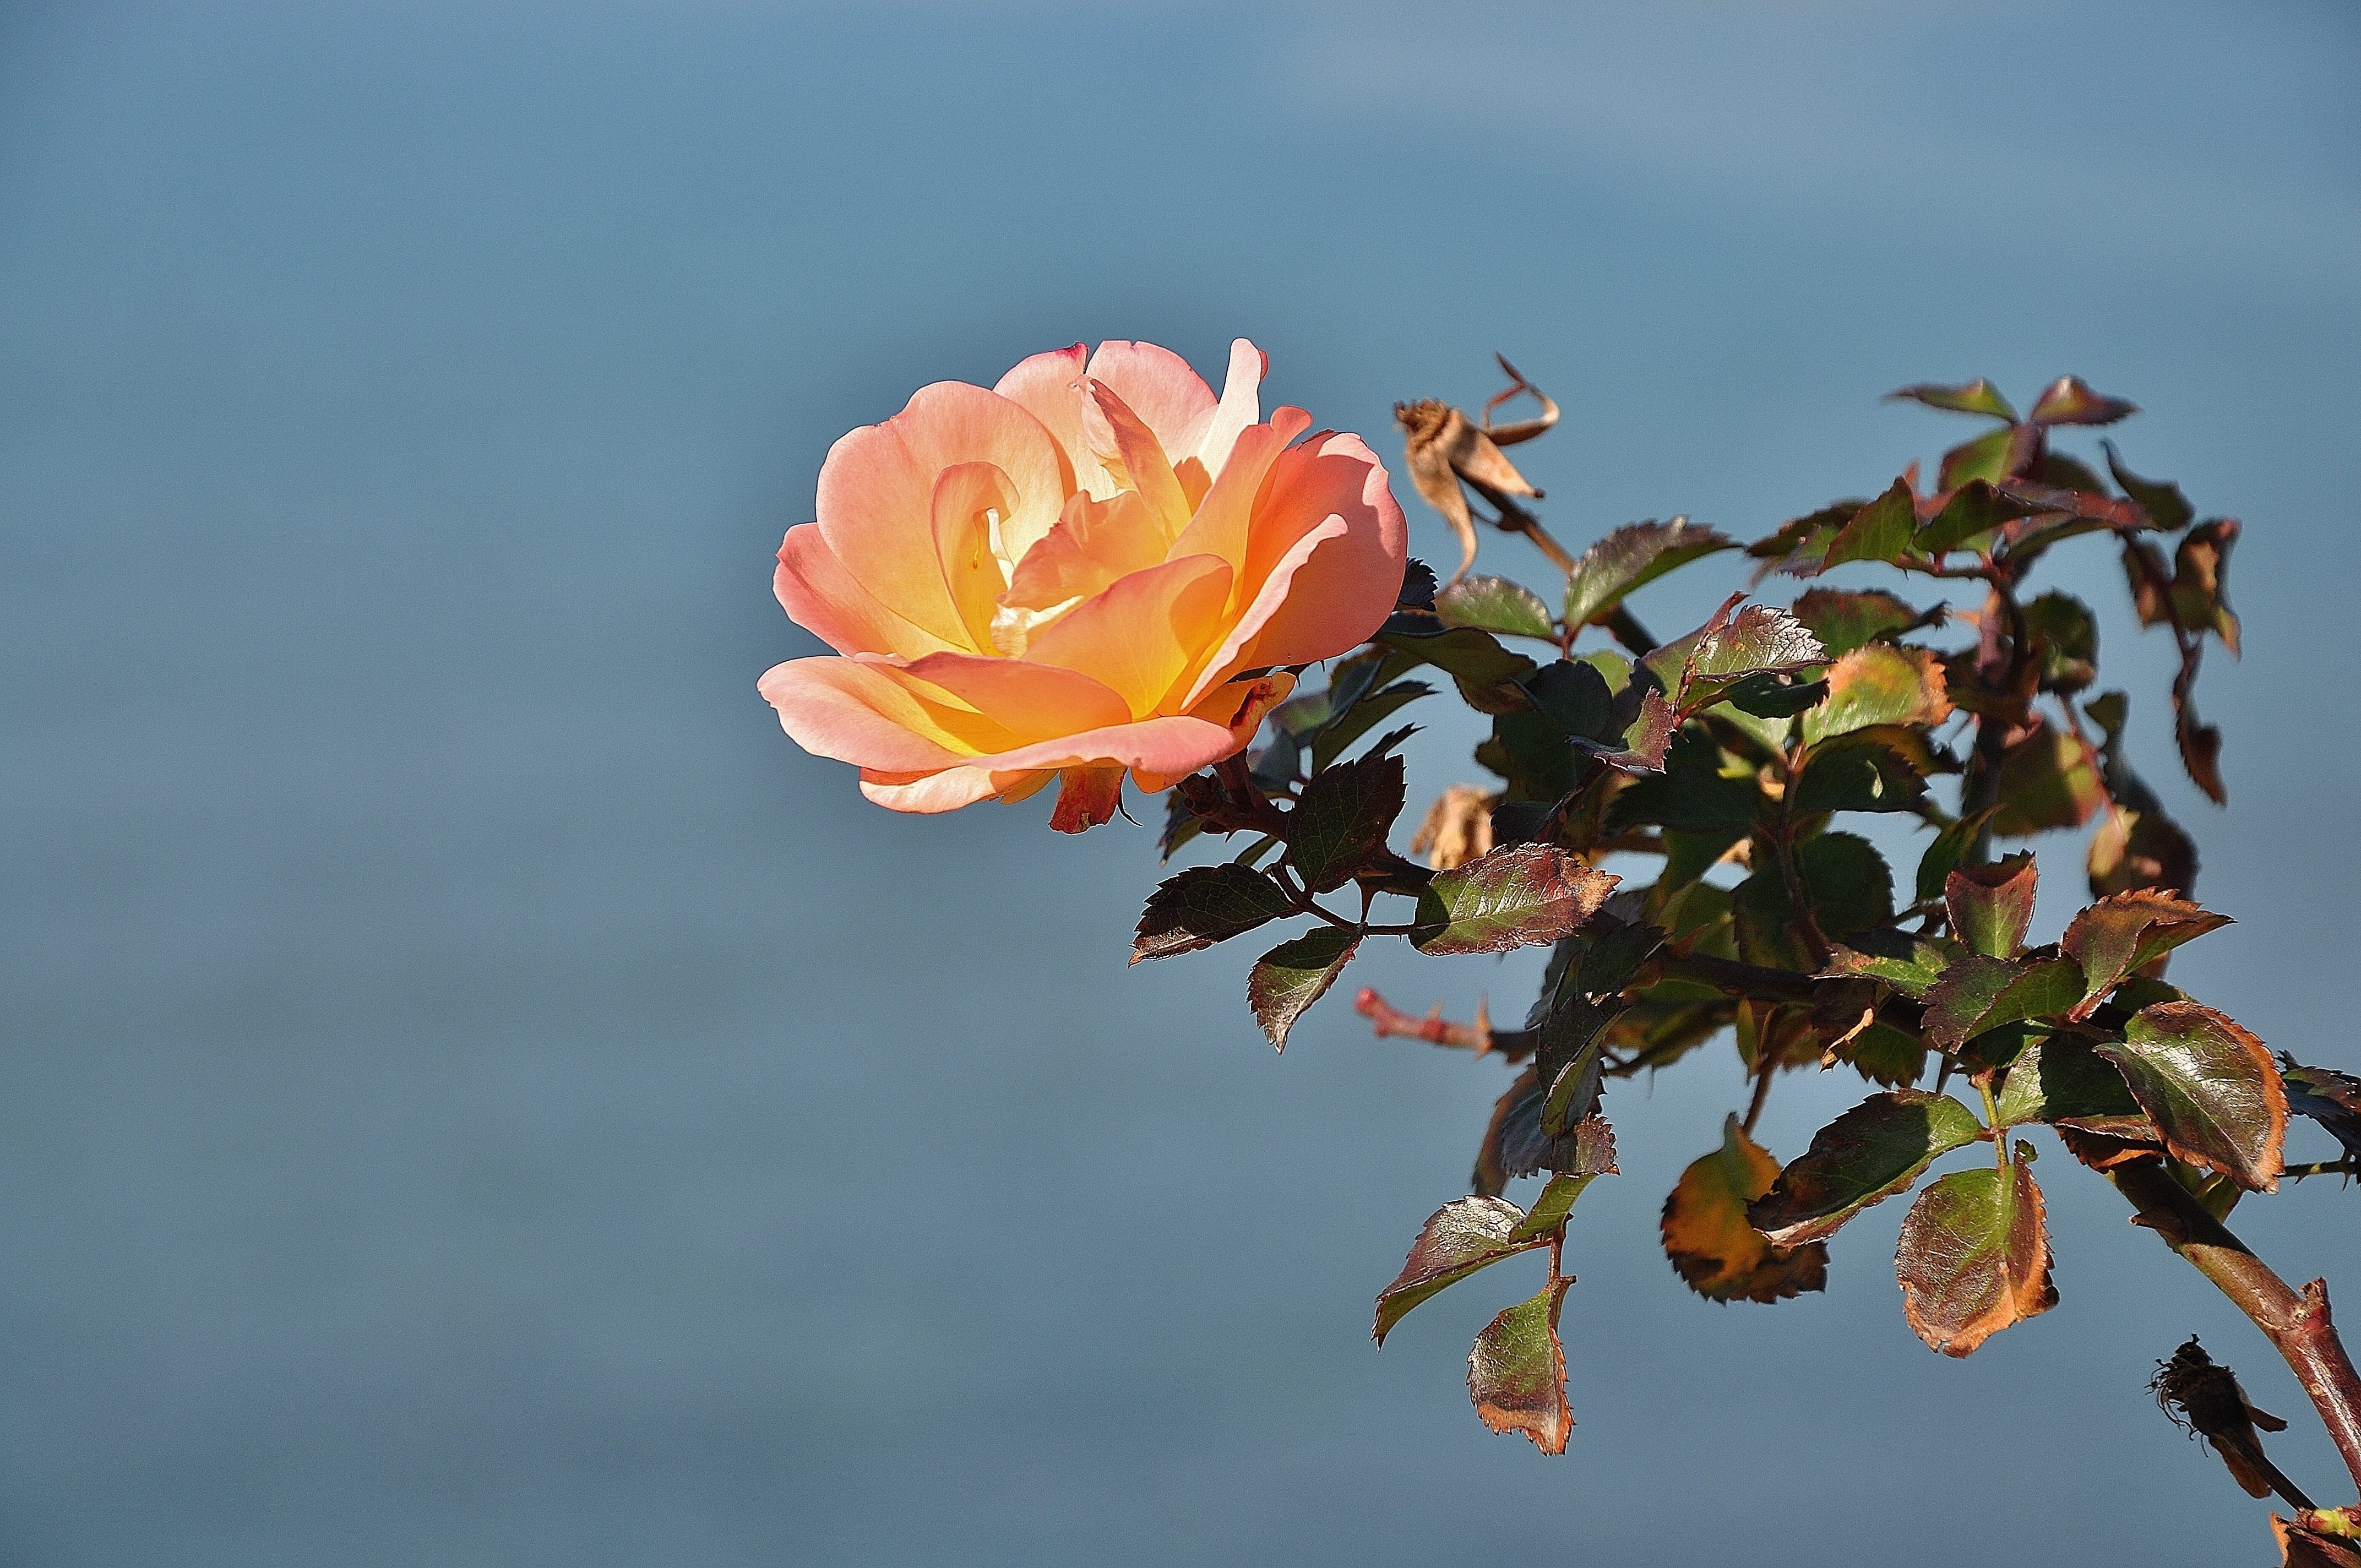 peach rose flower